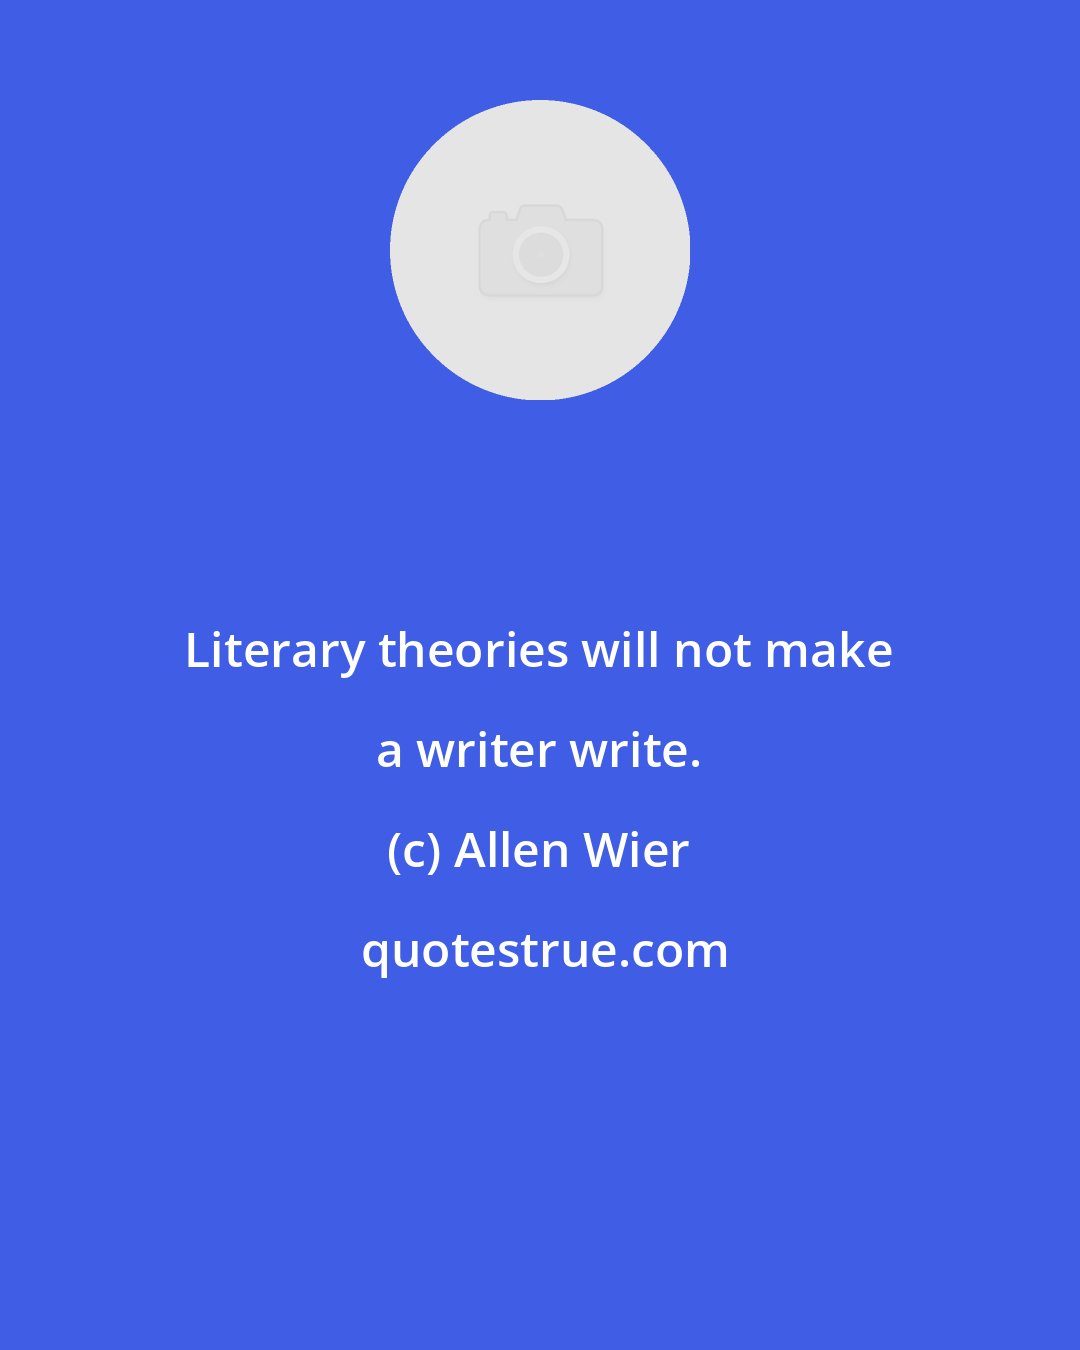 Allen Wier: Literary theories will not make a writer write.